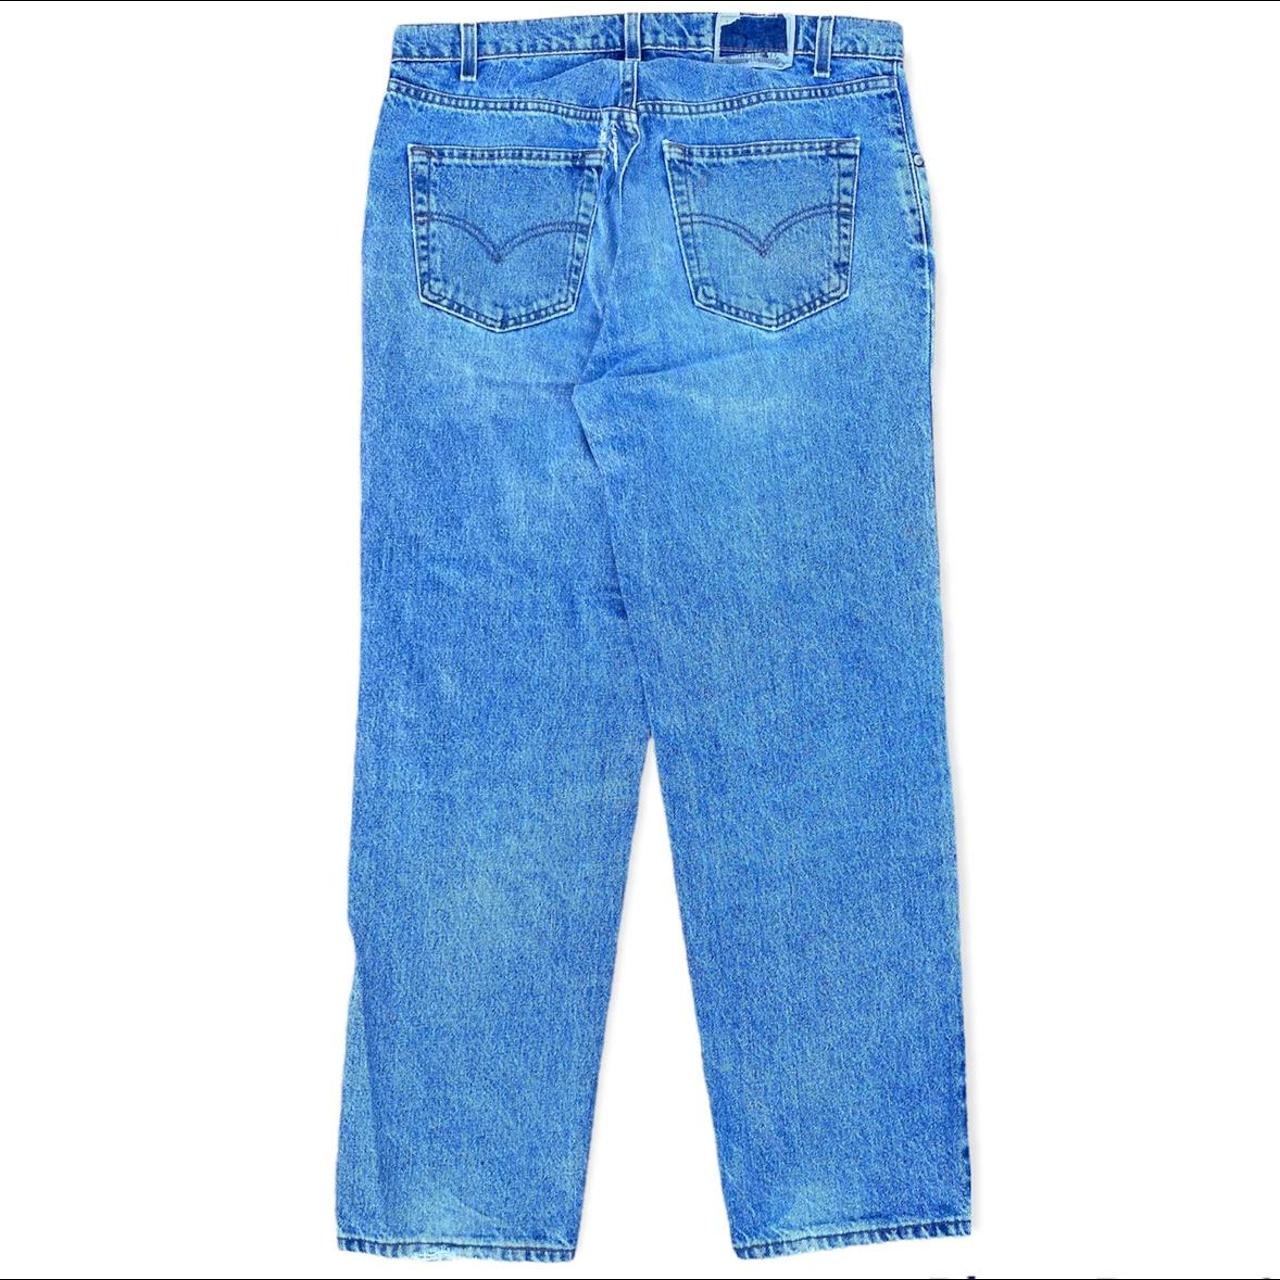 Vintage 90s Levi’s Silver Tab Denim Jeans Jeans... - Depop